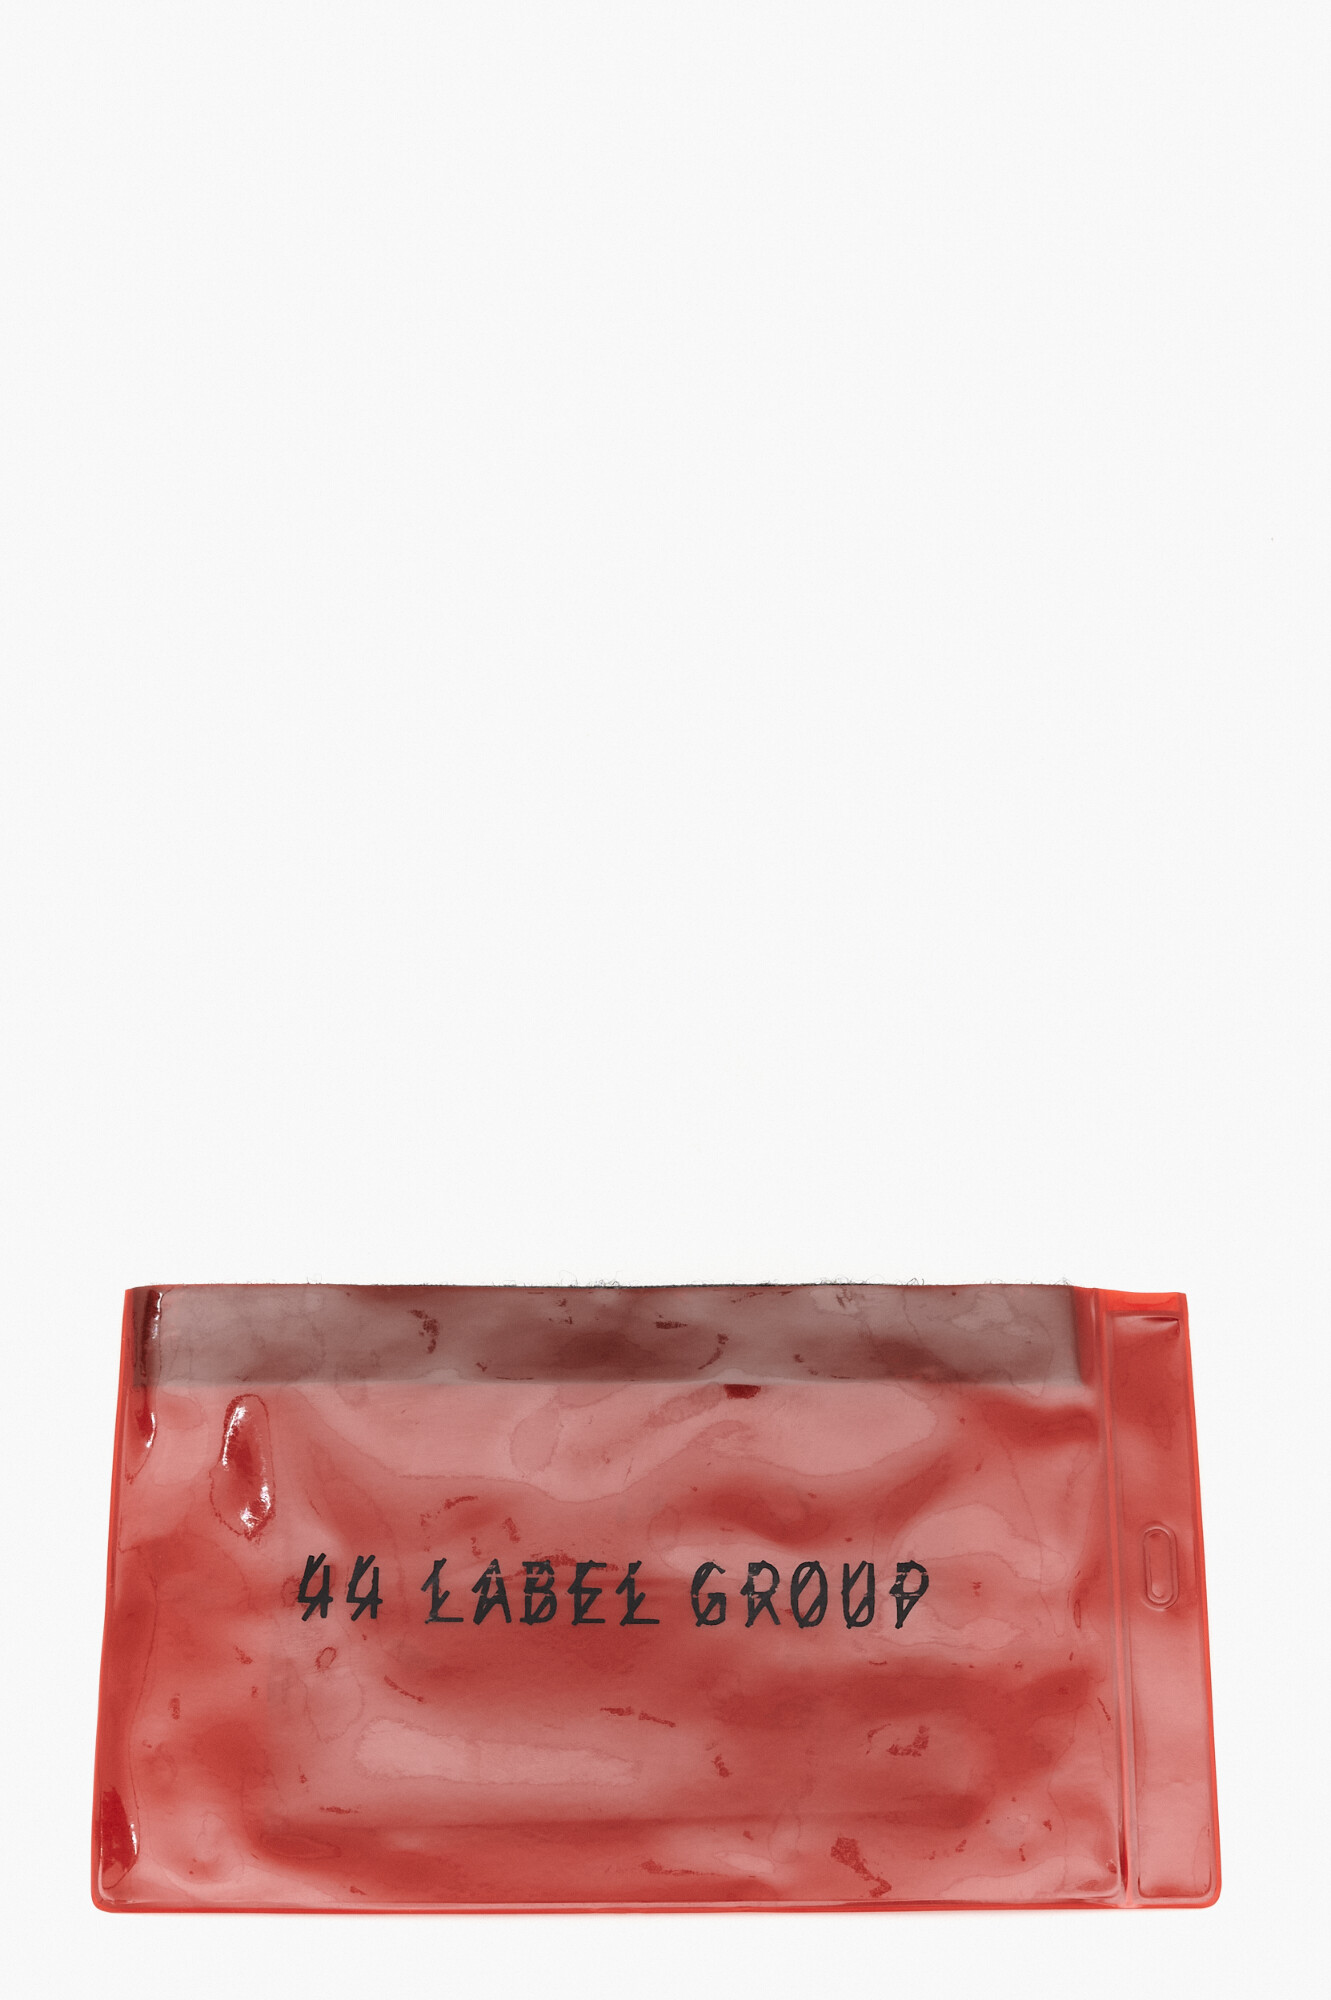 44 Label Group Окуляри